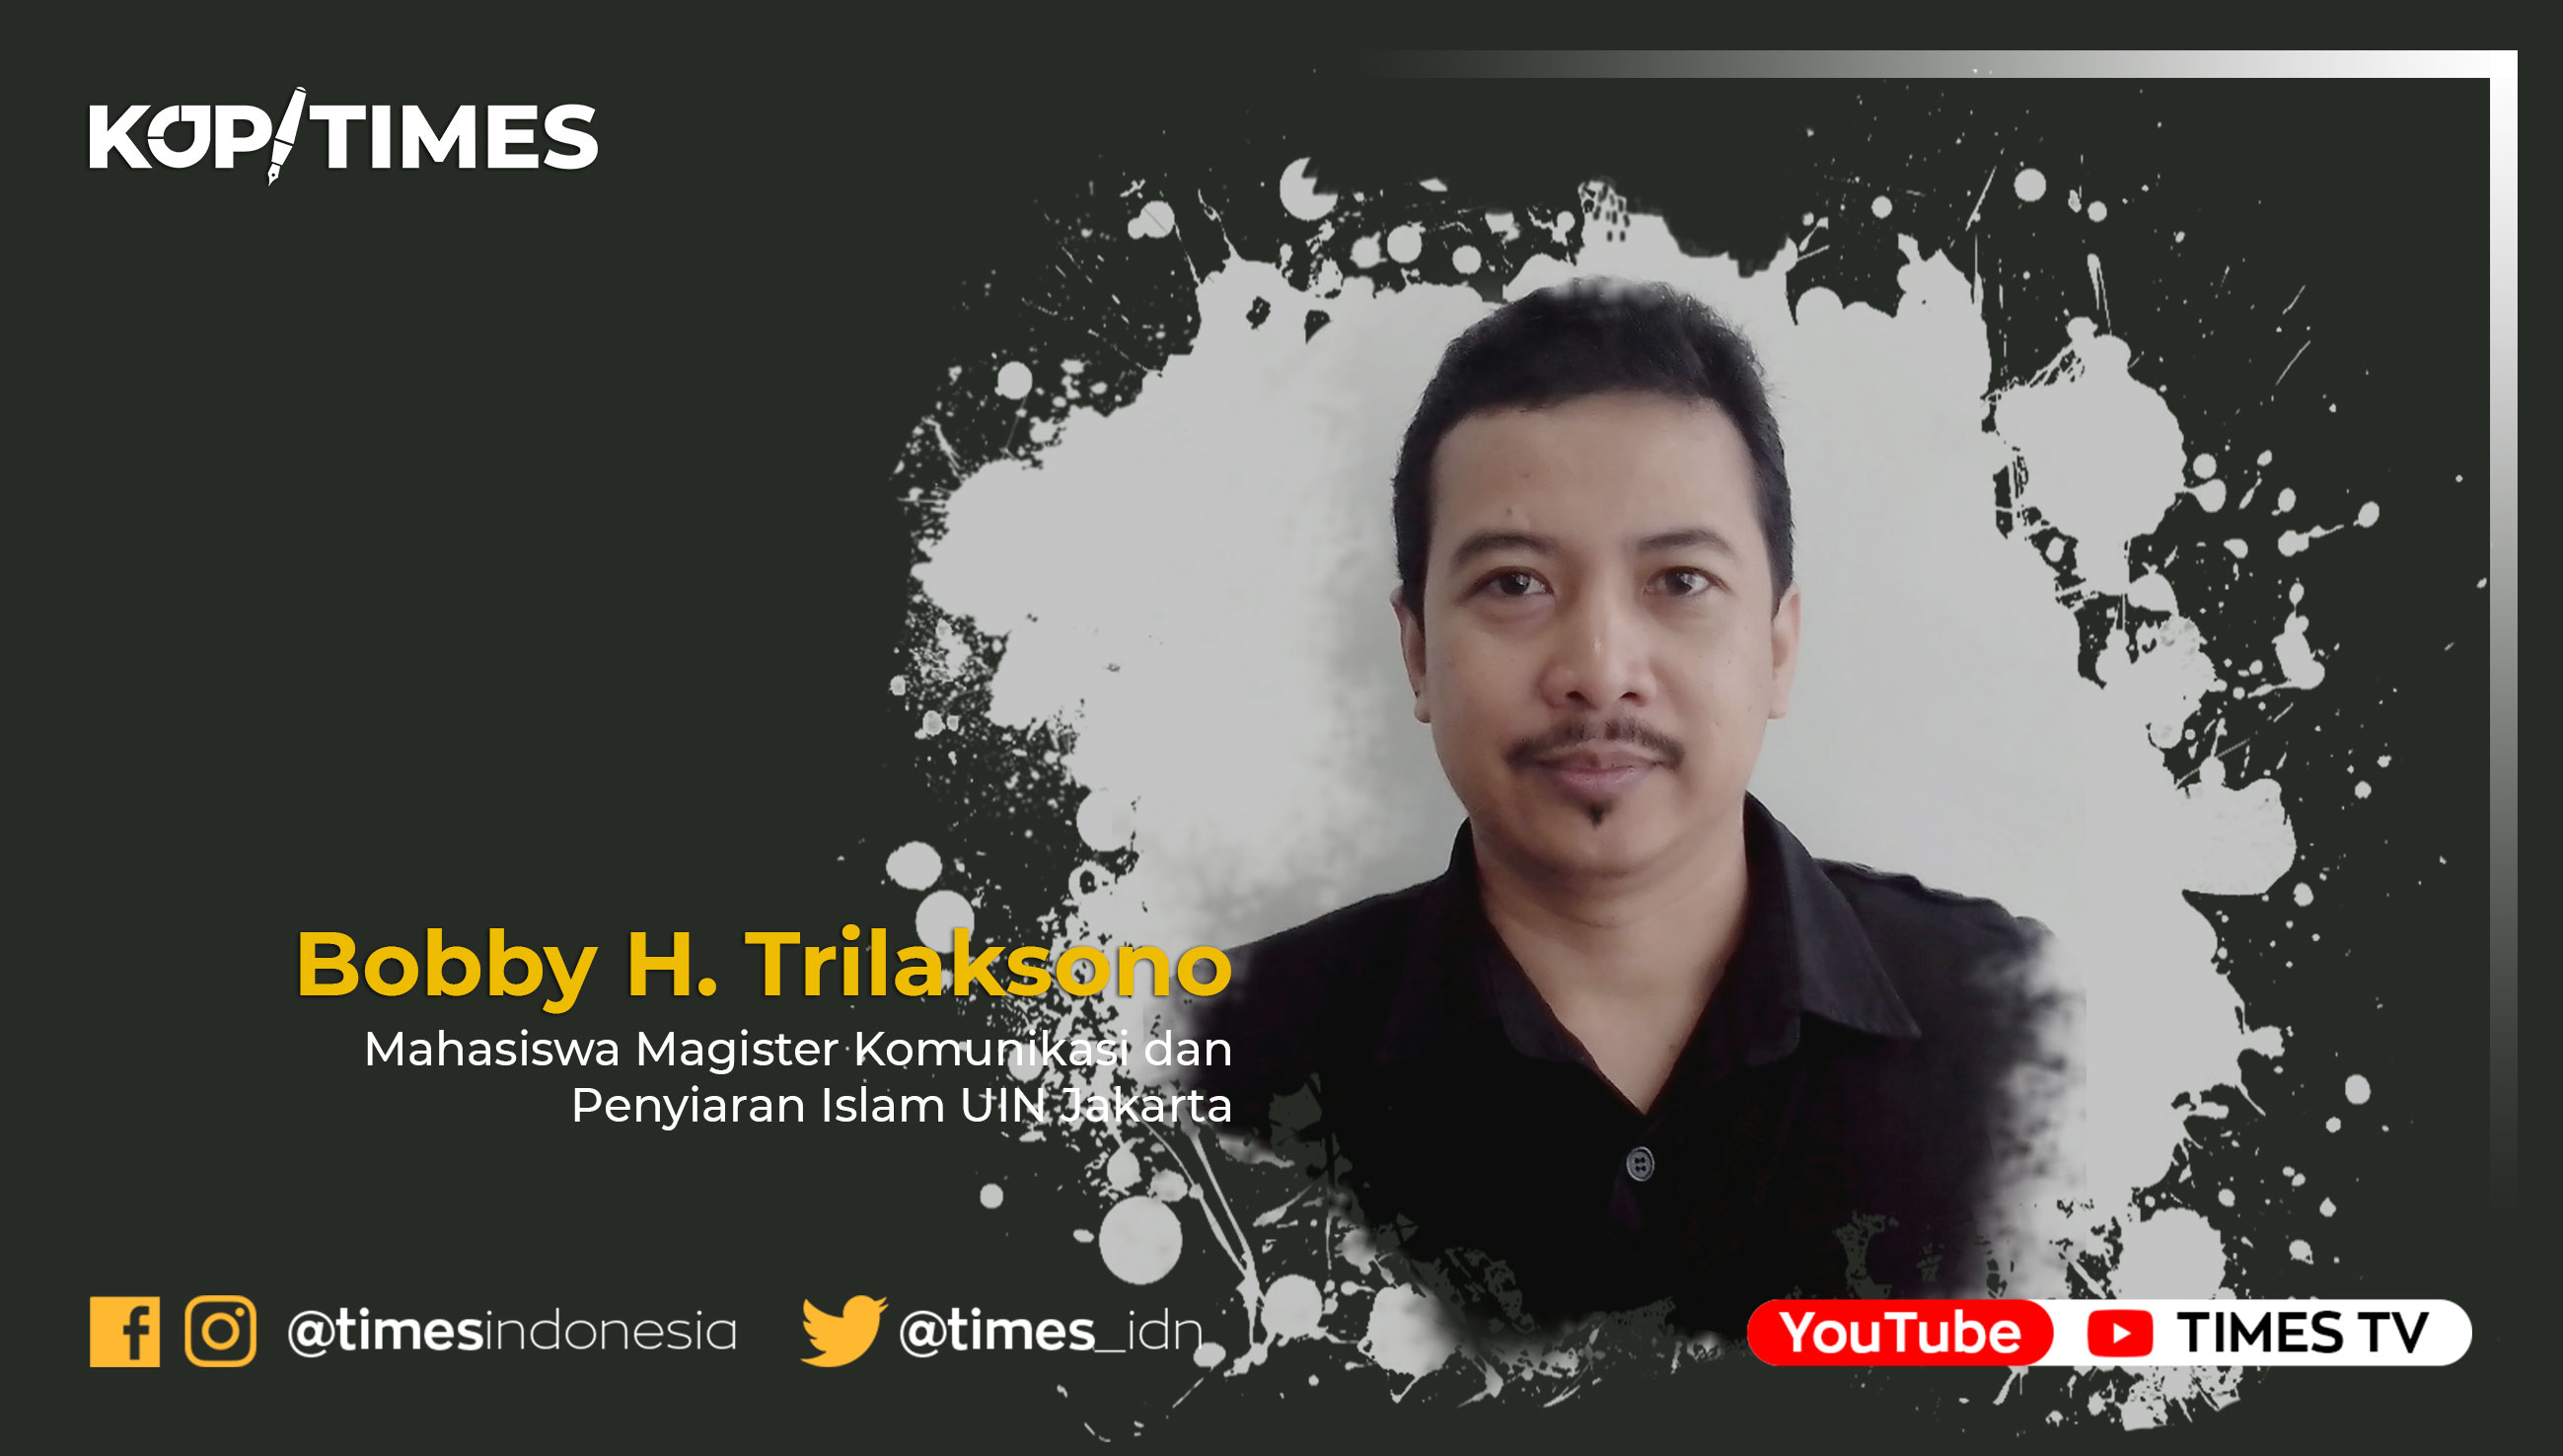 Bobby H. Trilaksono, Mahasiswa Magister Komunikasi dan Penyiaran Islam UIN Jakarta (Grafis: TIMES Indonesia)